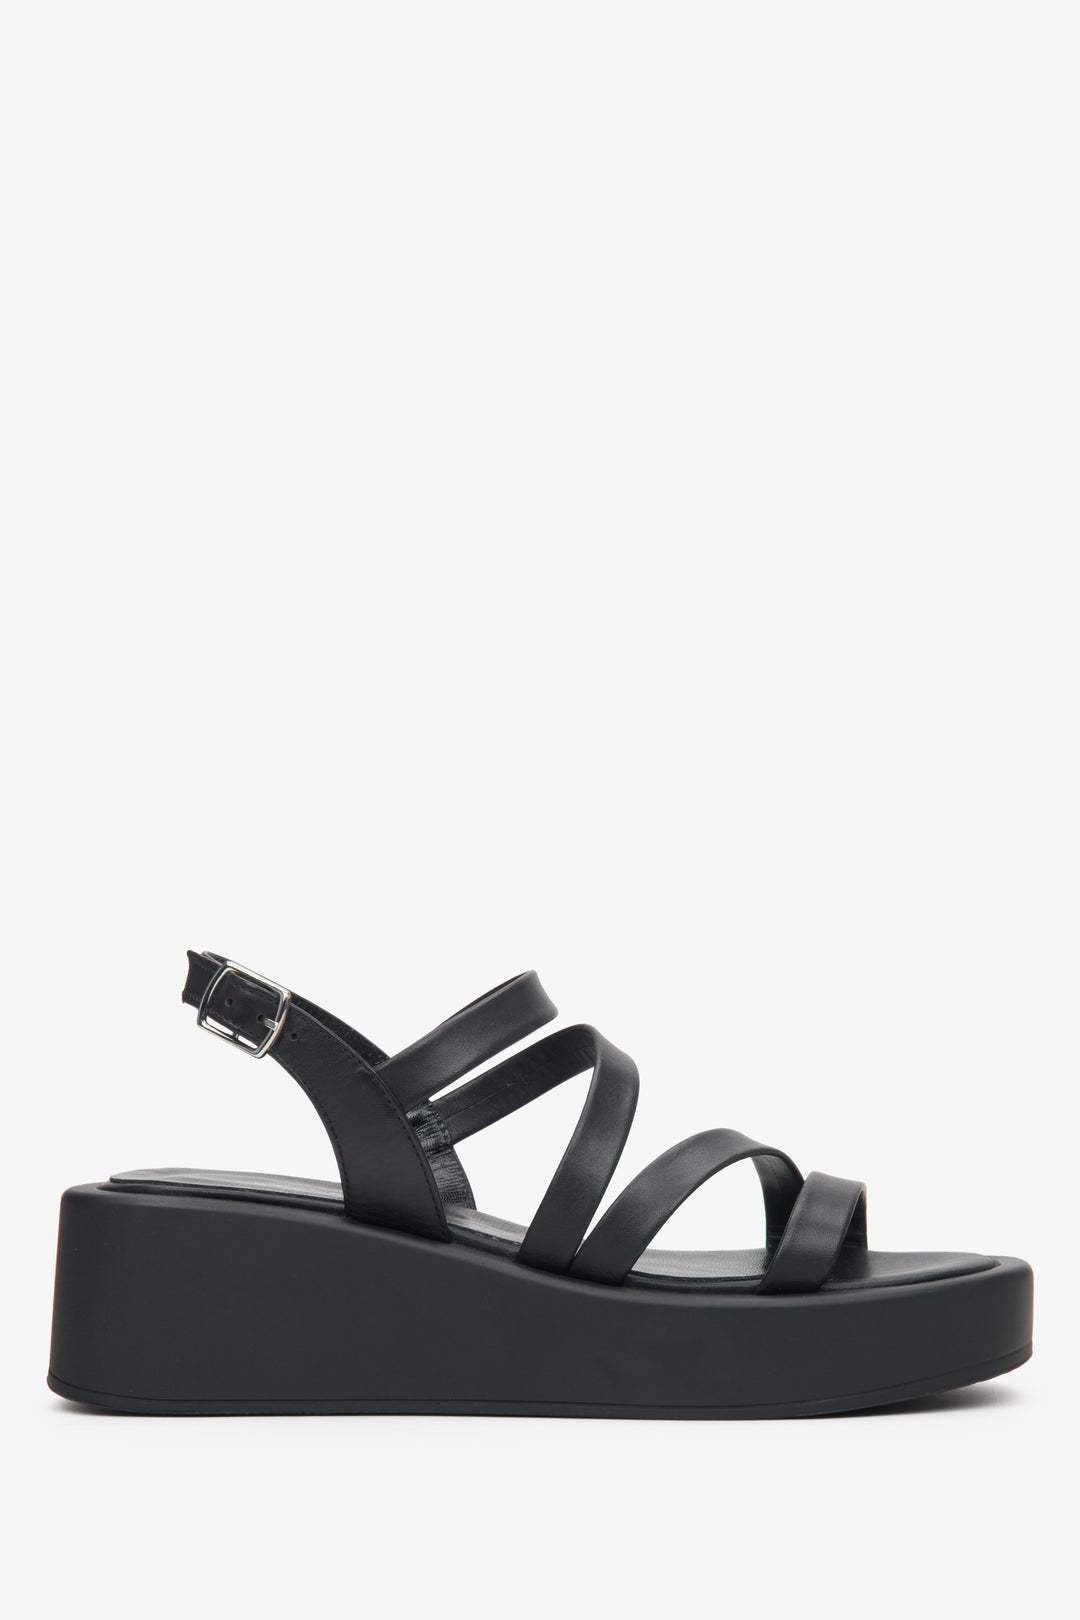 Women's Black Leather Wedge Sandals Estro ER00115096.